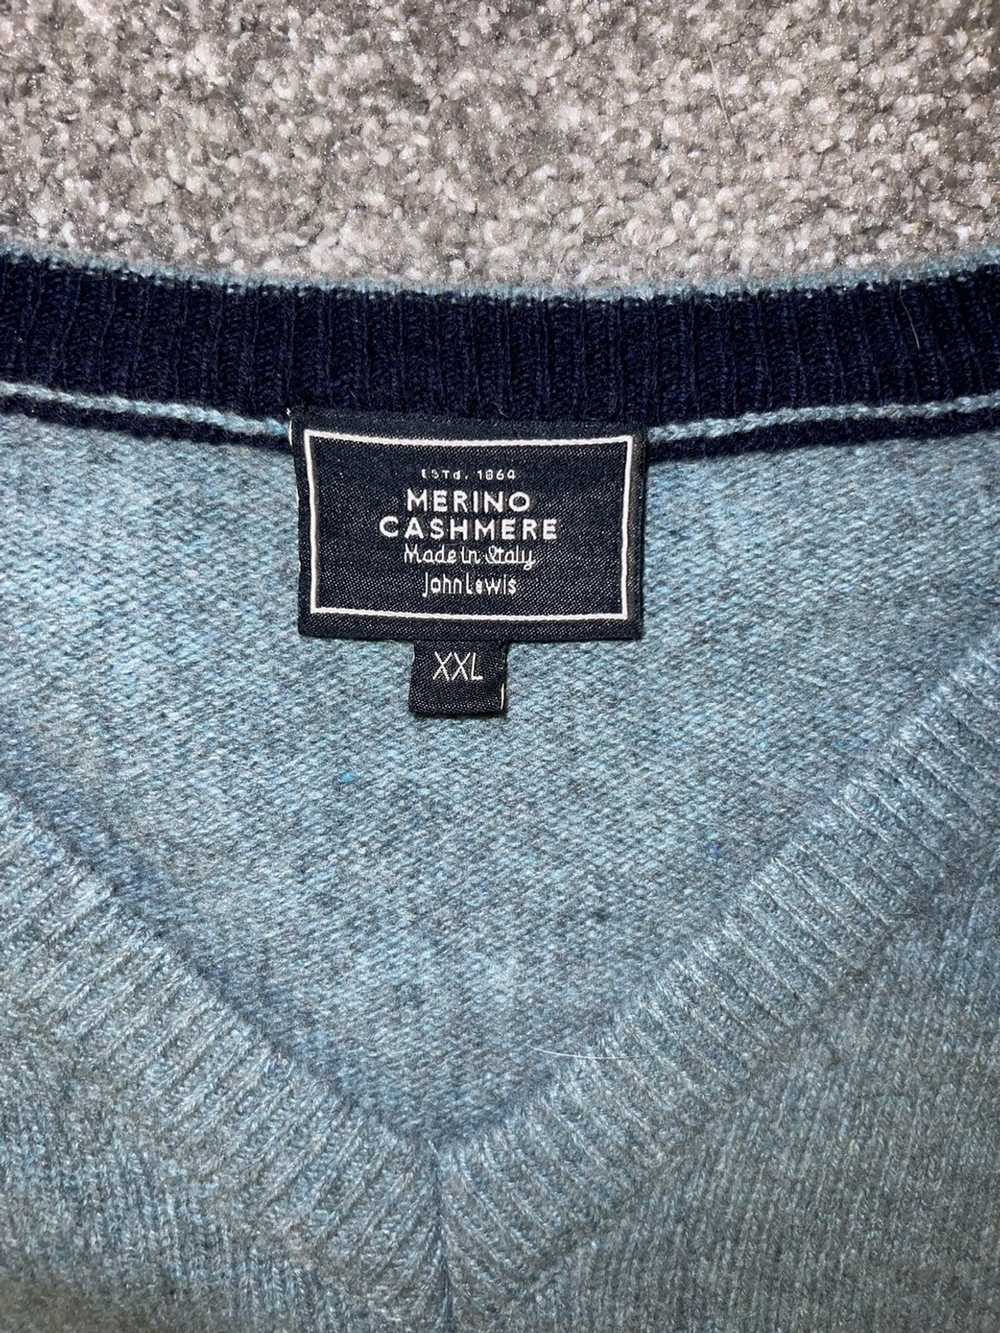 Cashmere & Wool Vintage Merino Cashmere Sweater x… - image 3